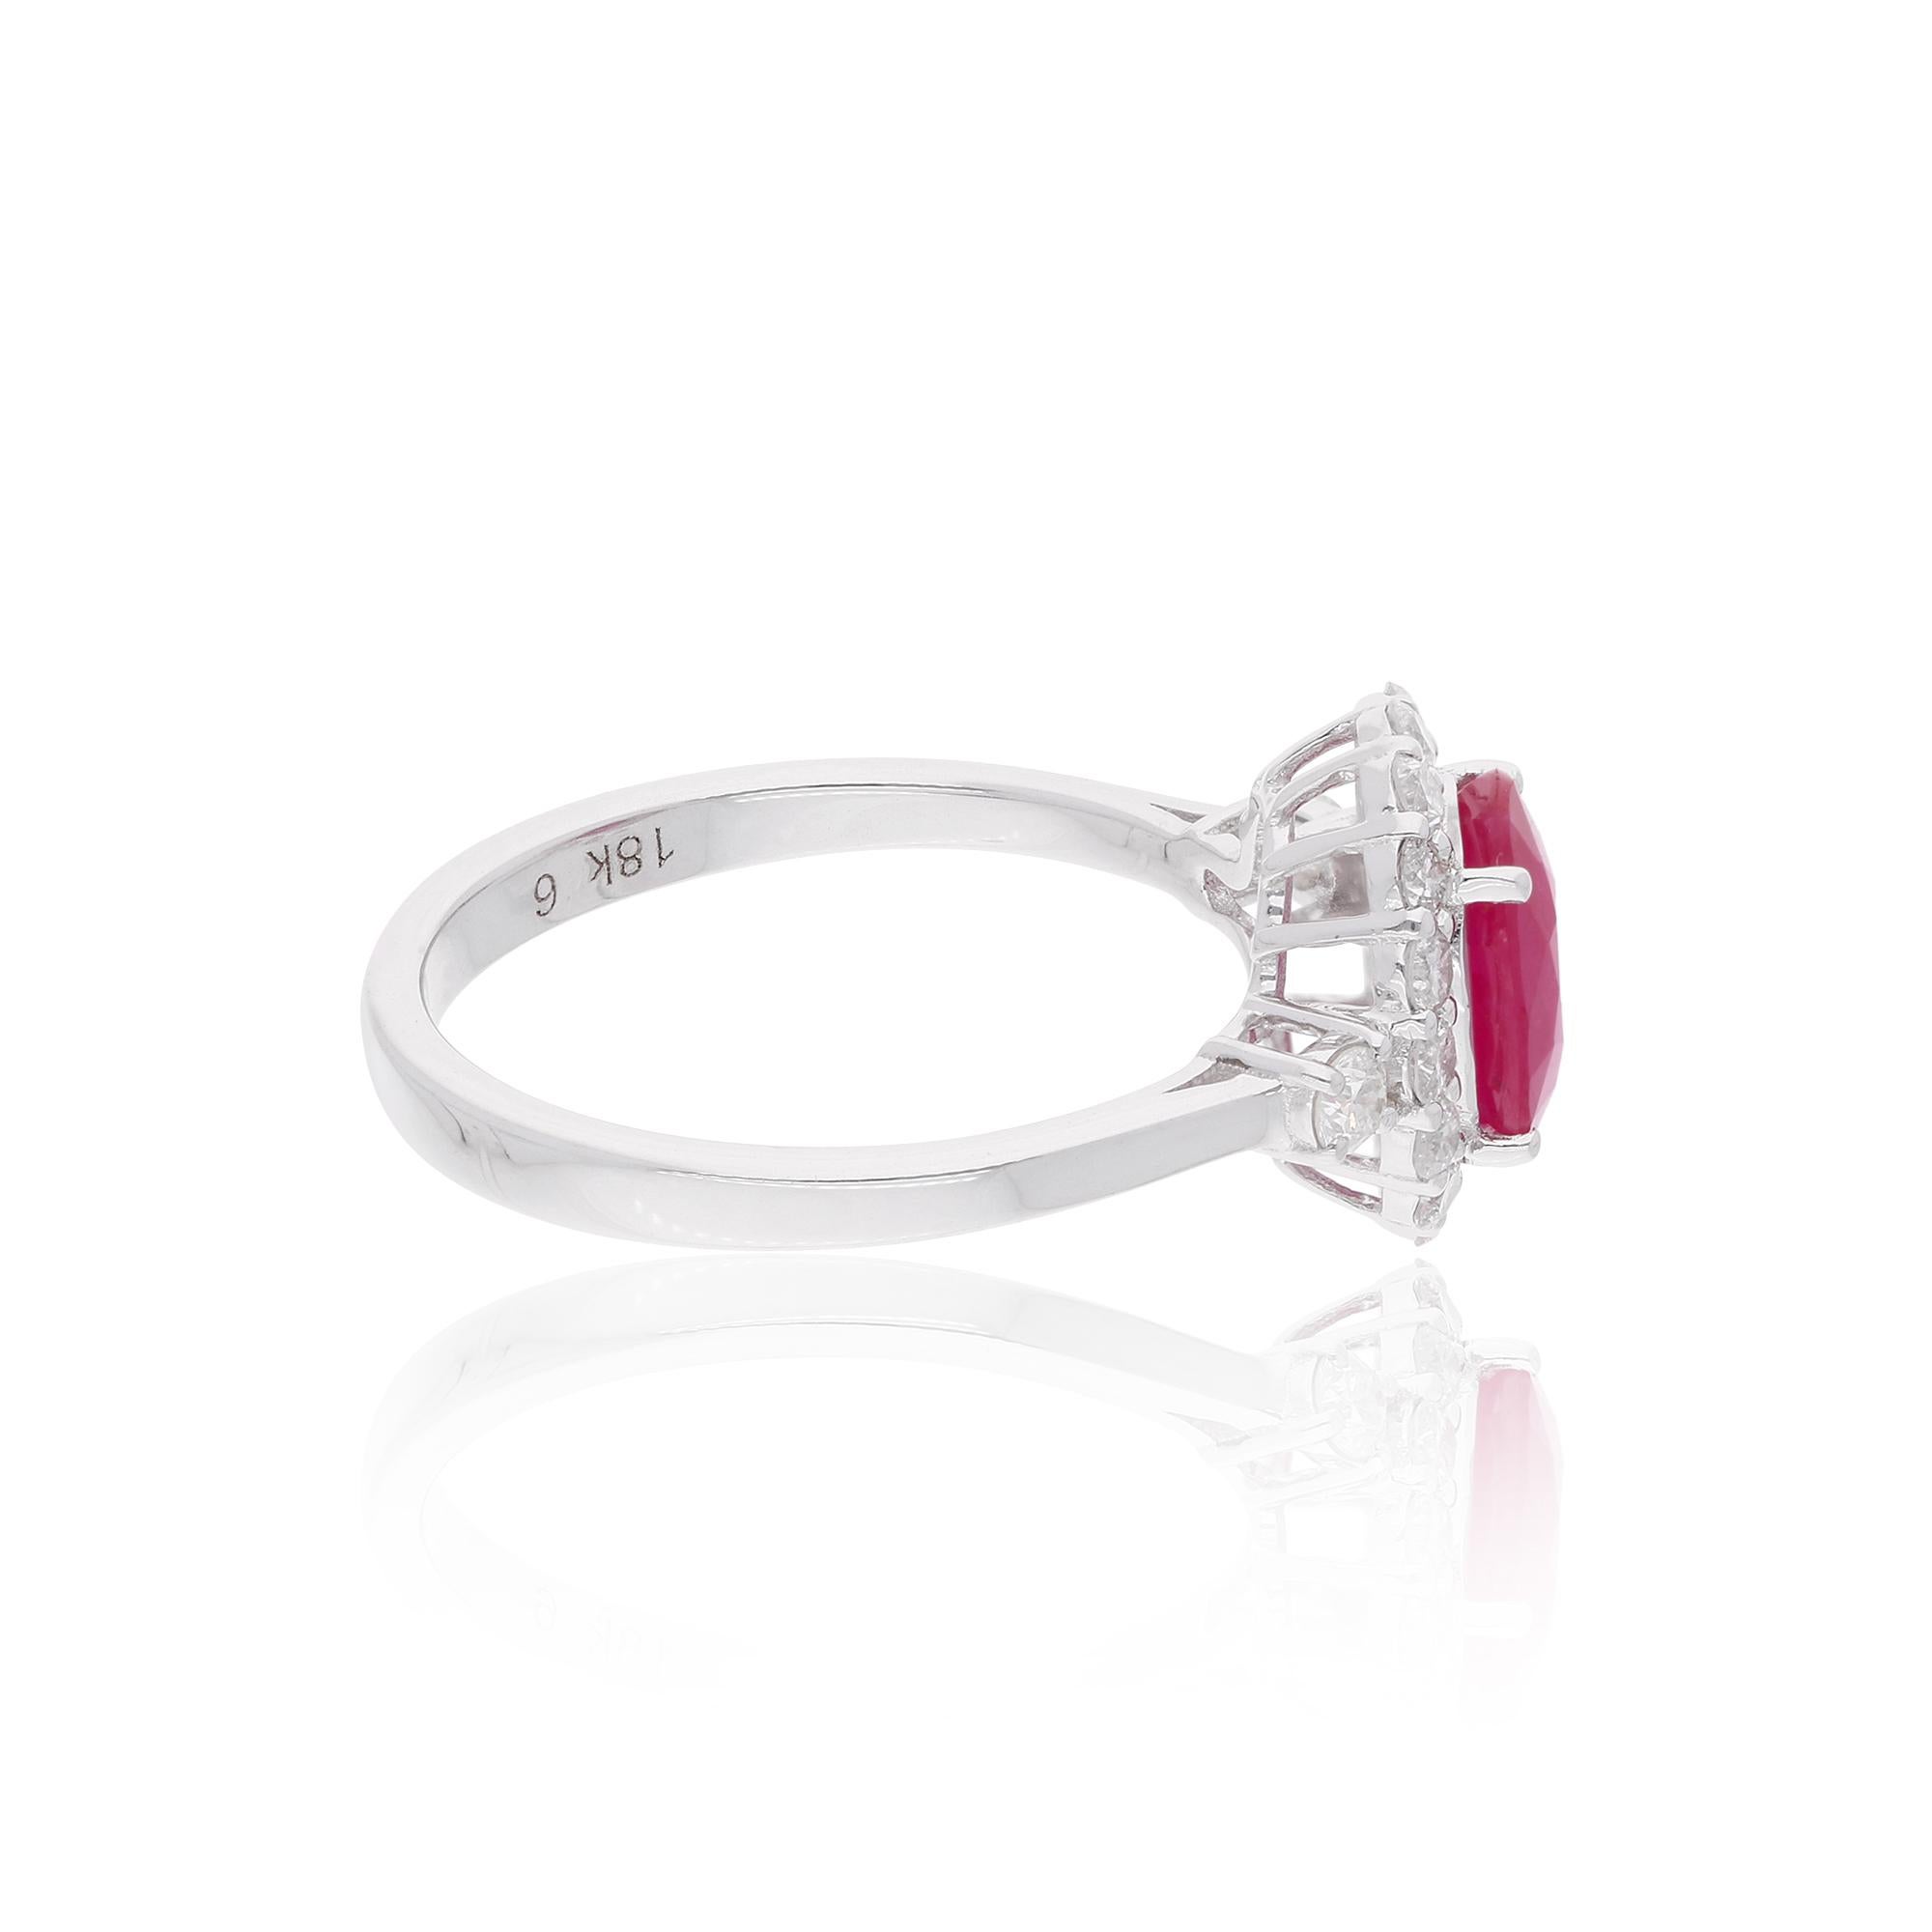 Oval Cut Oval Shape Ruby Gemstone Cocktail Ring Diamond 14 Karat White Gold Fine Jewelry For Sale